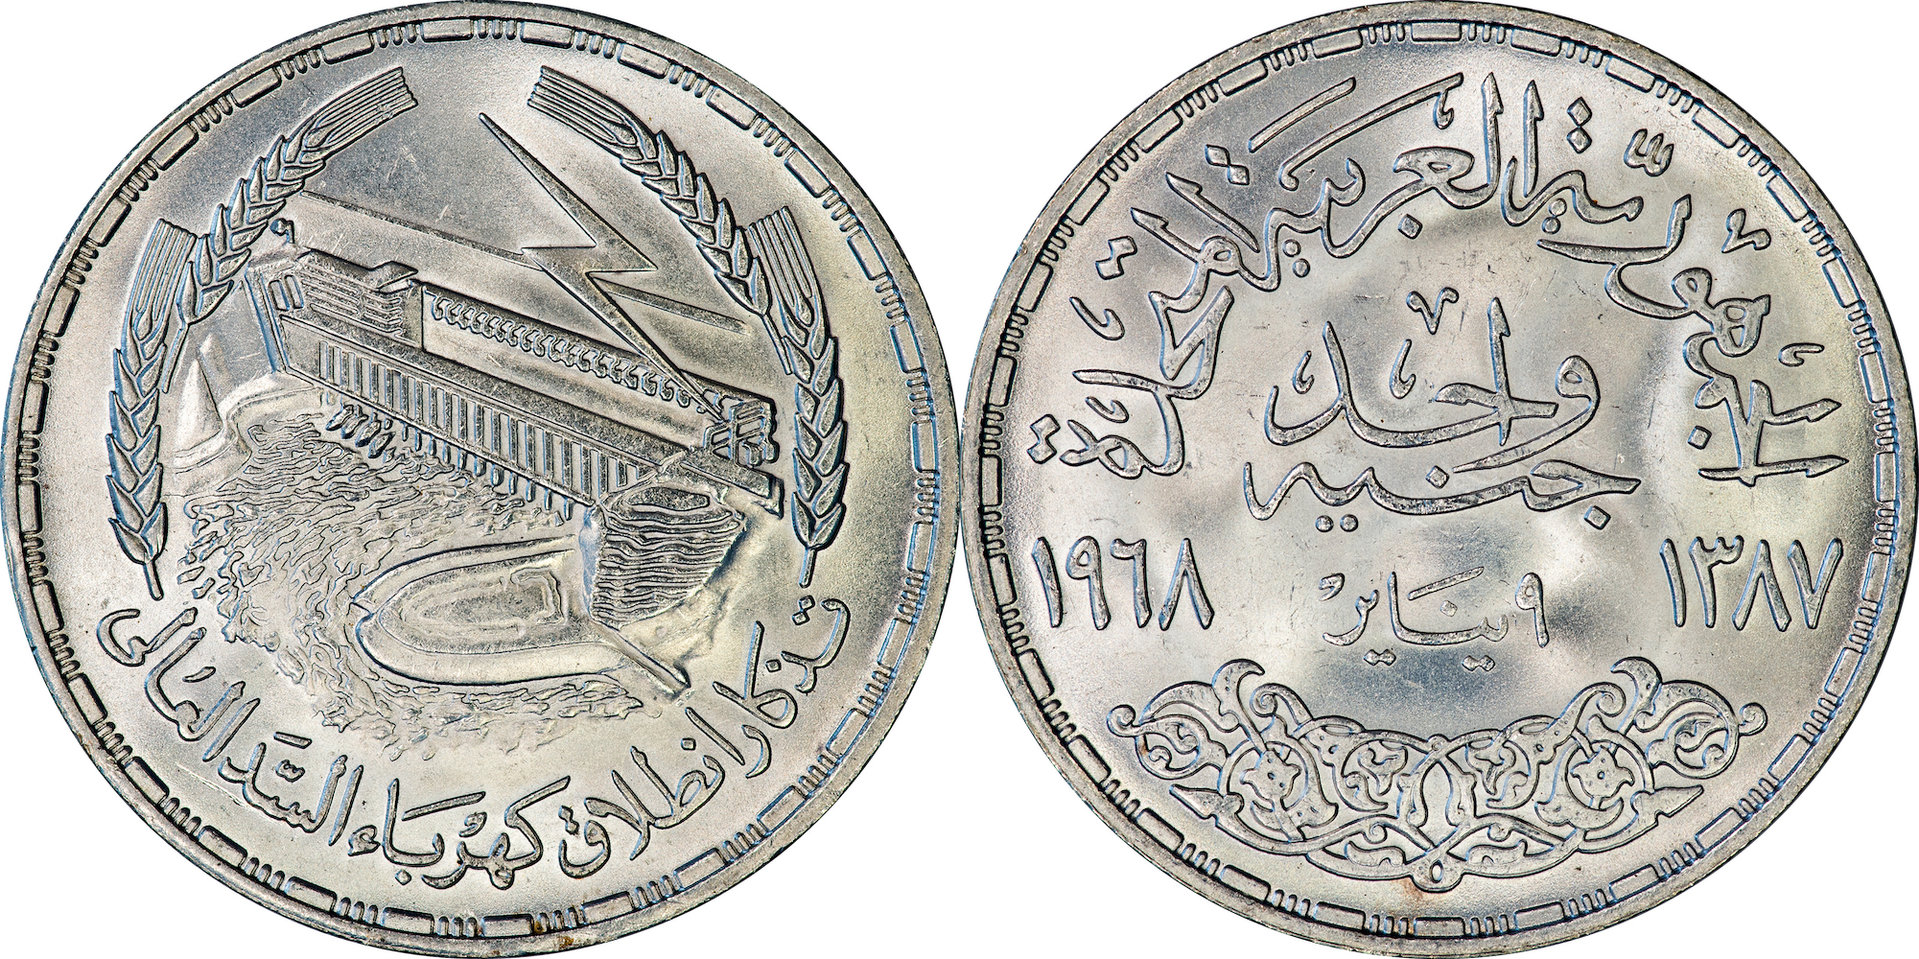 Egypt - 1968 1 Pound.jpg